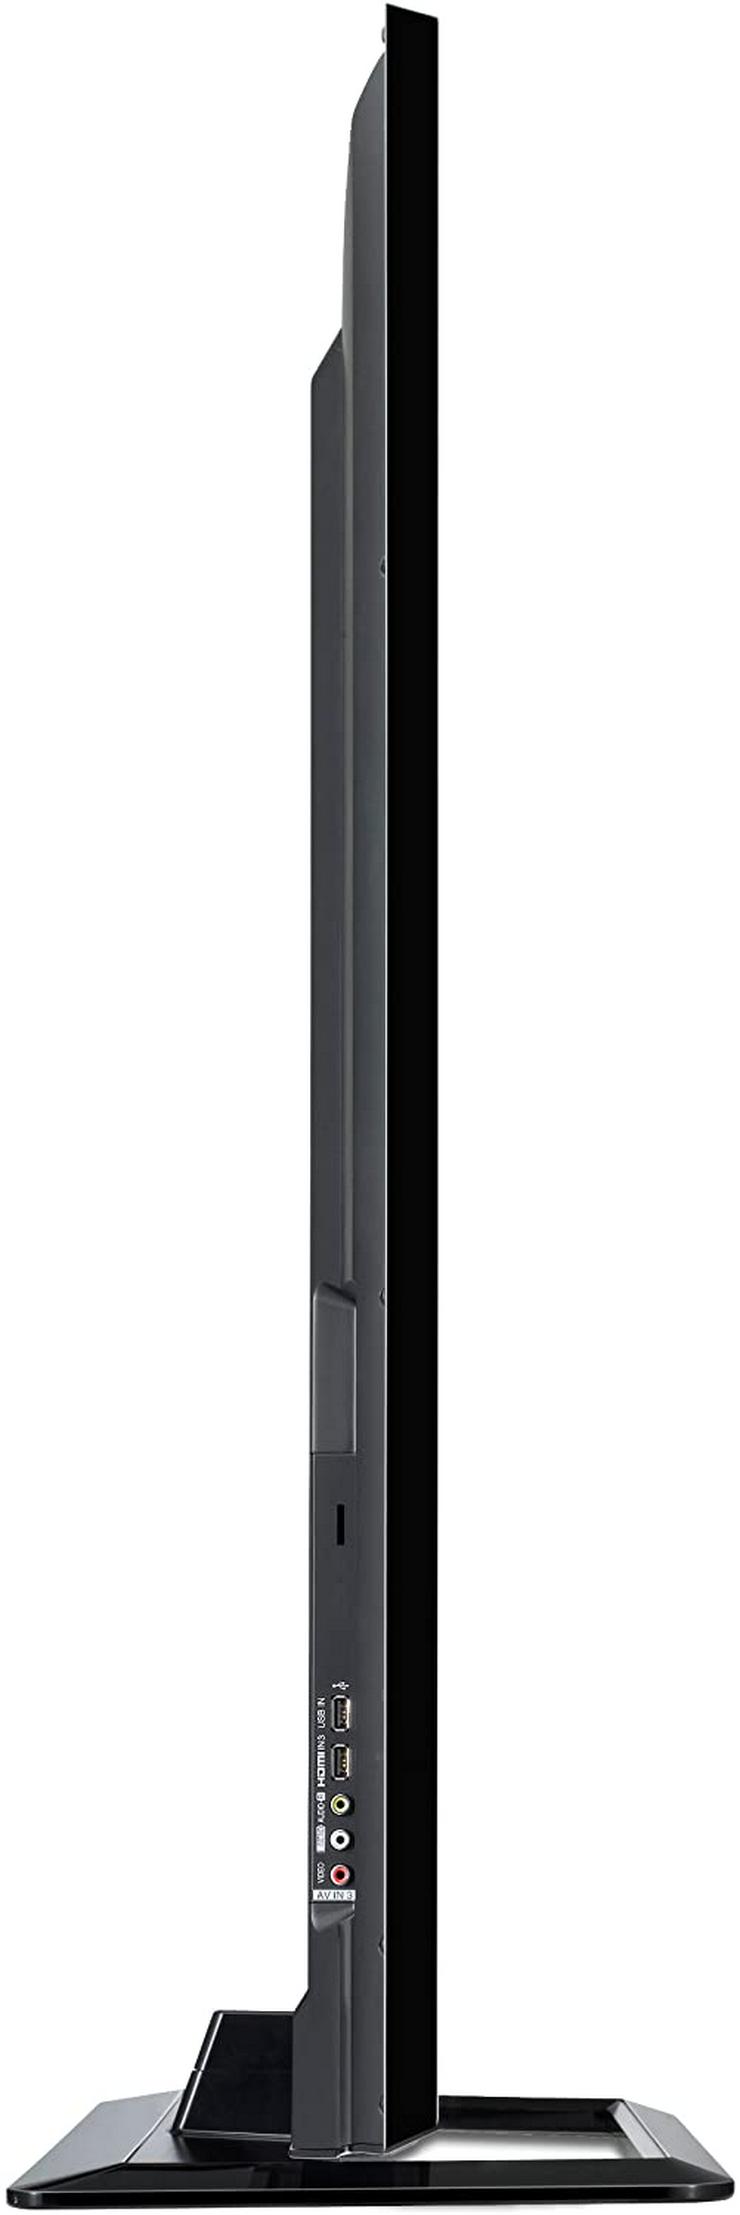 Bild 3: LG 50PA4500 127 cm (50 Zoll) Plasma Fernseher (HD-Ready, Twin Tuner)